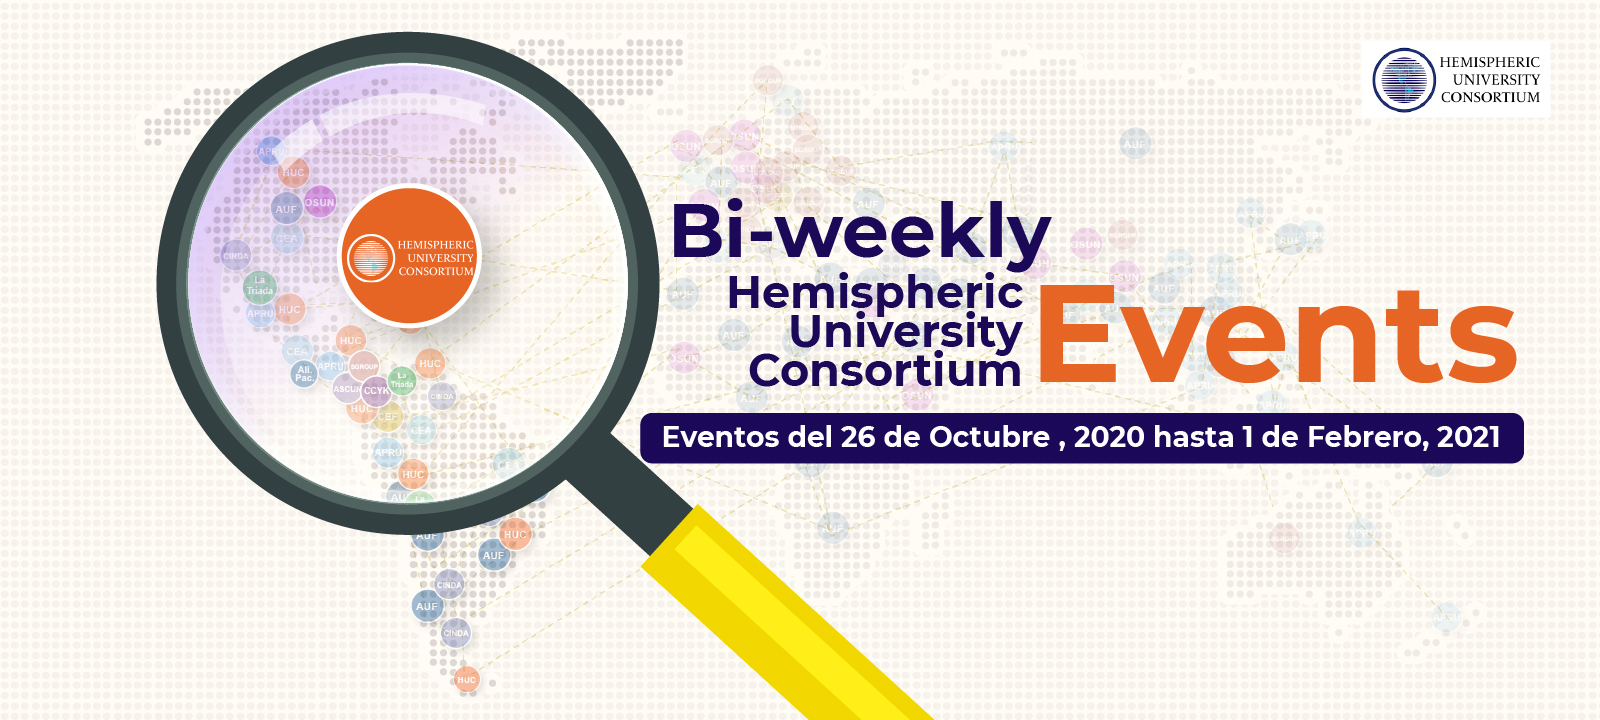 Bi-weekly Hemispheric University Consortium Events